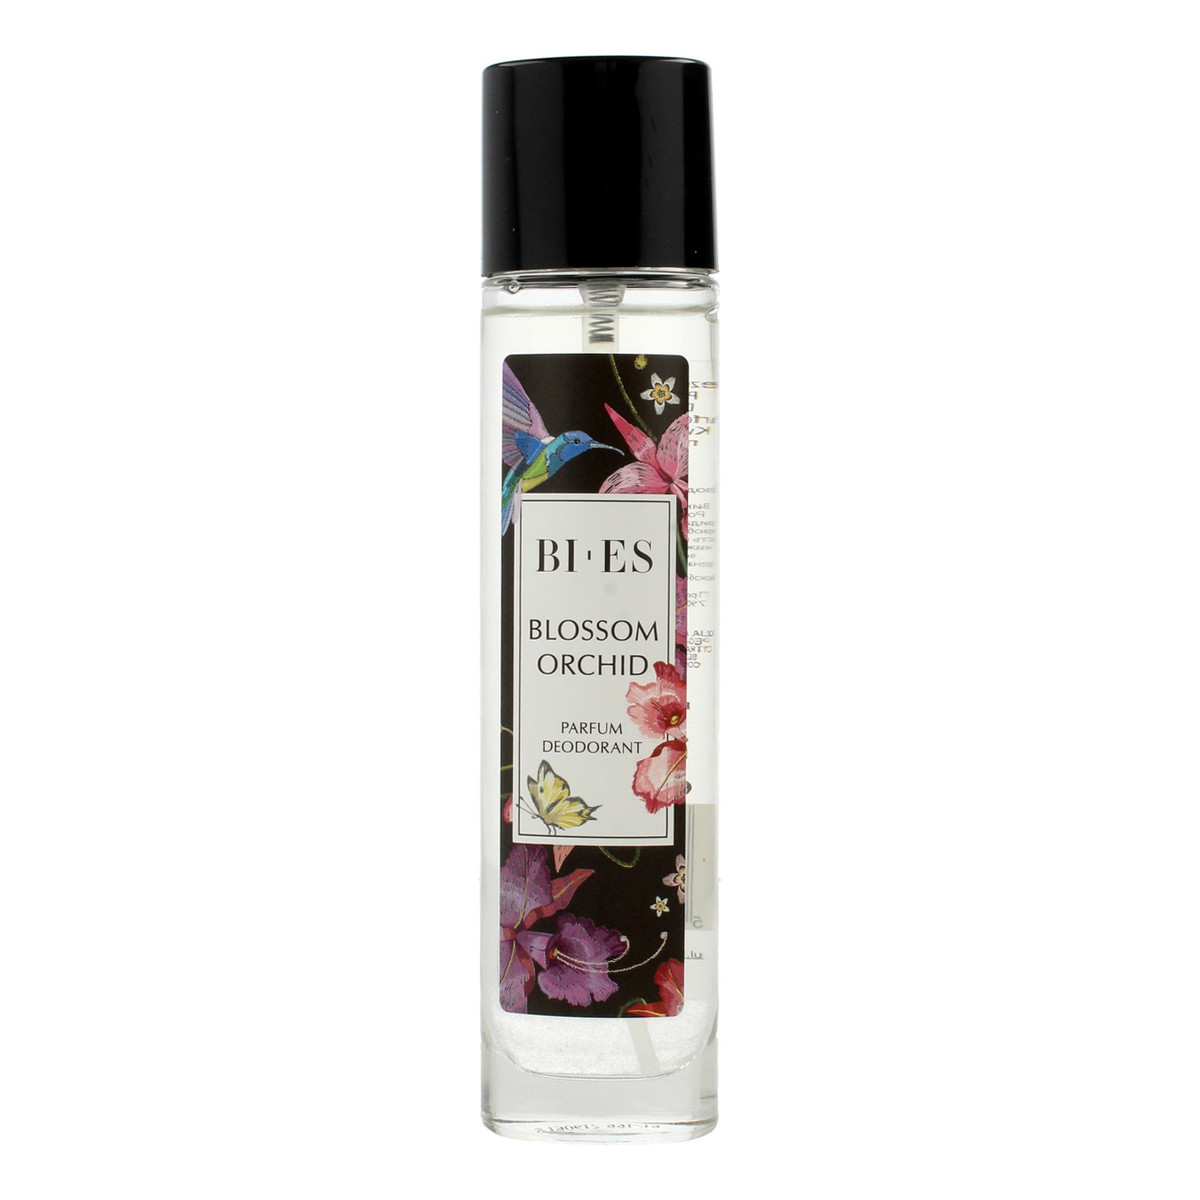 Bi-es Blossom Orchid Dezodorant w atomizerze 75ml